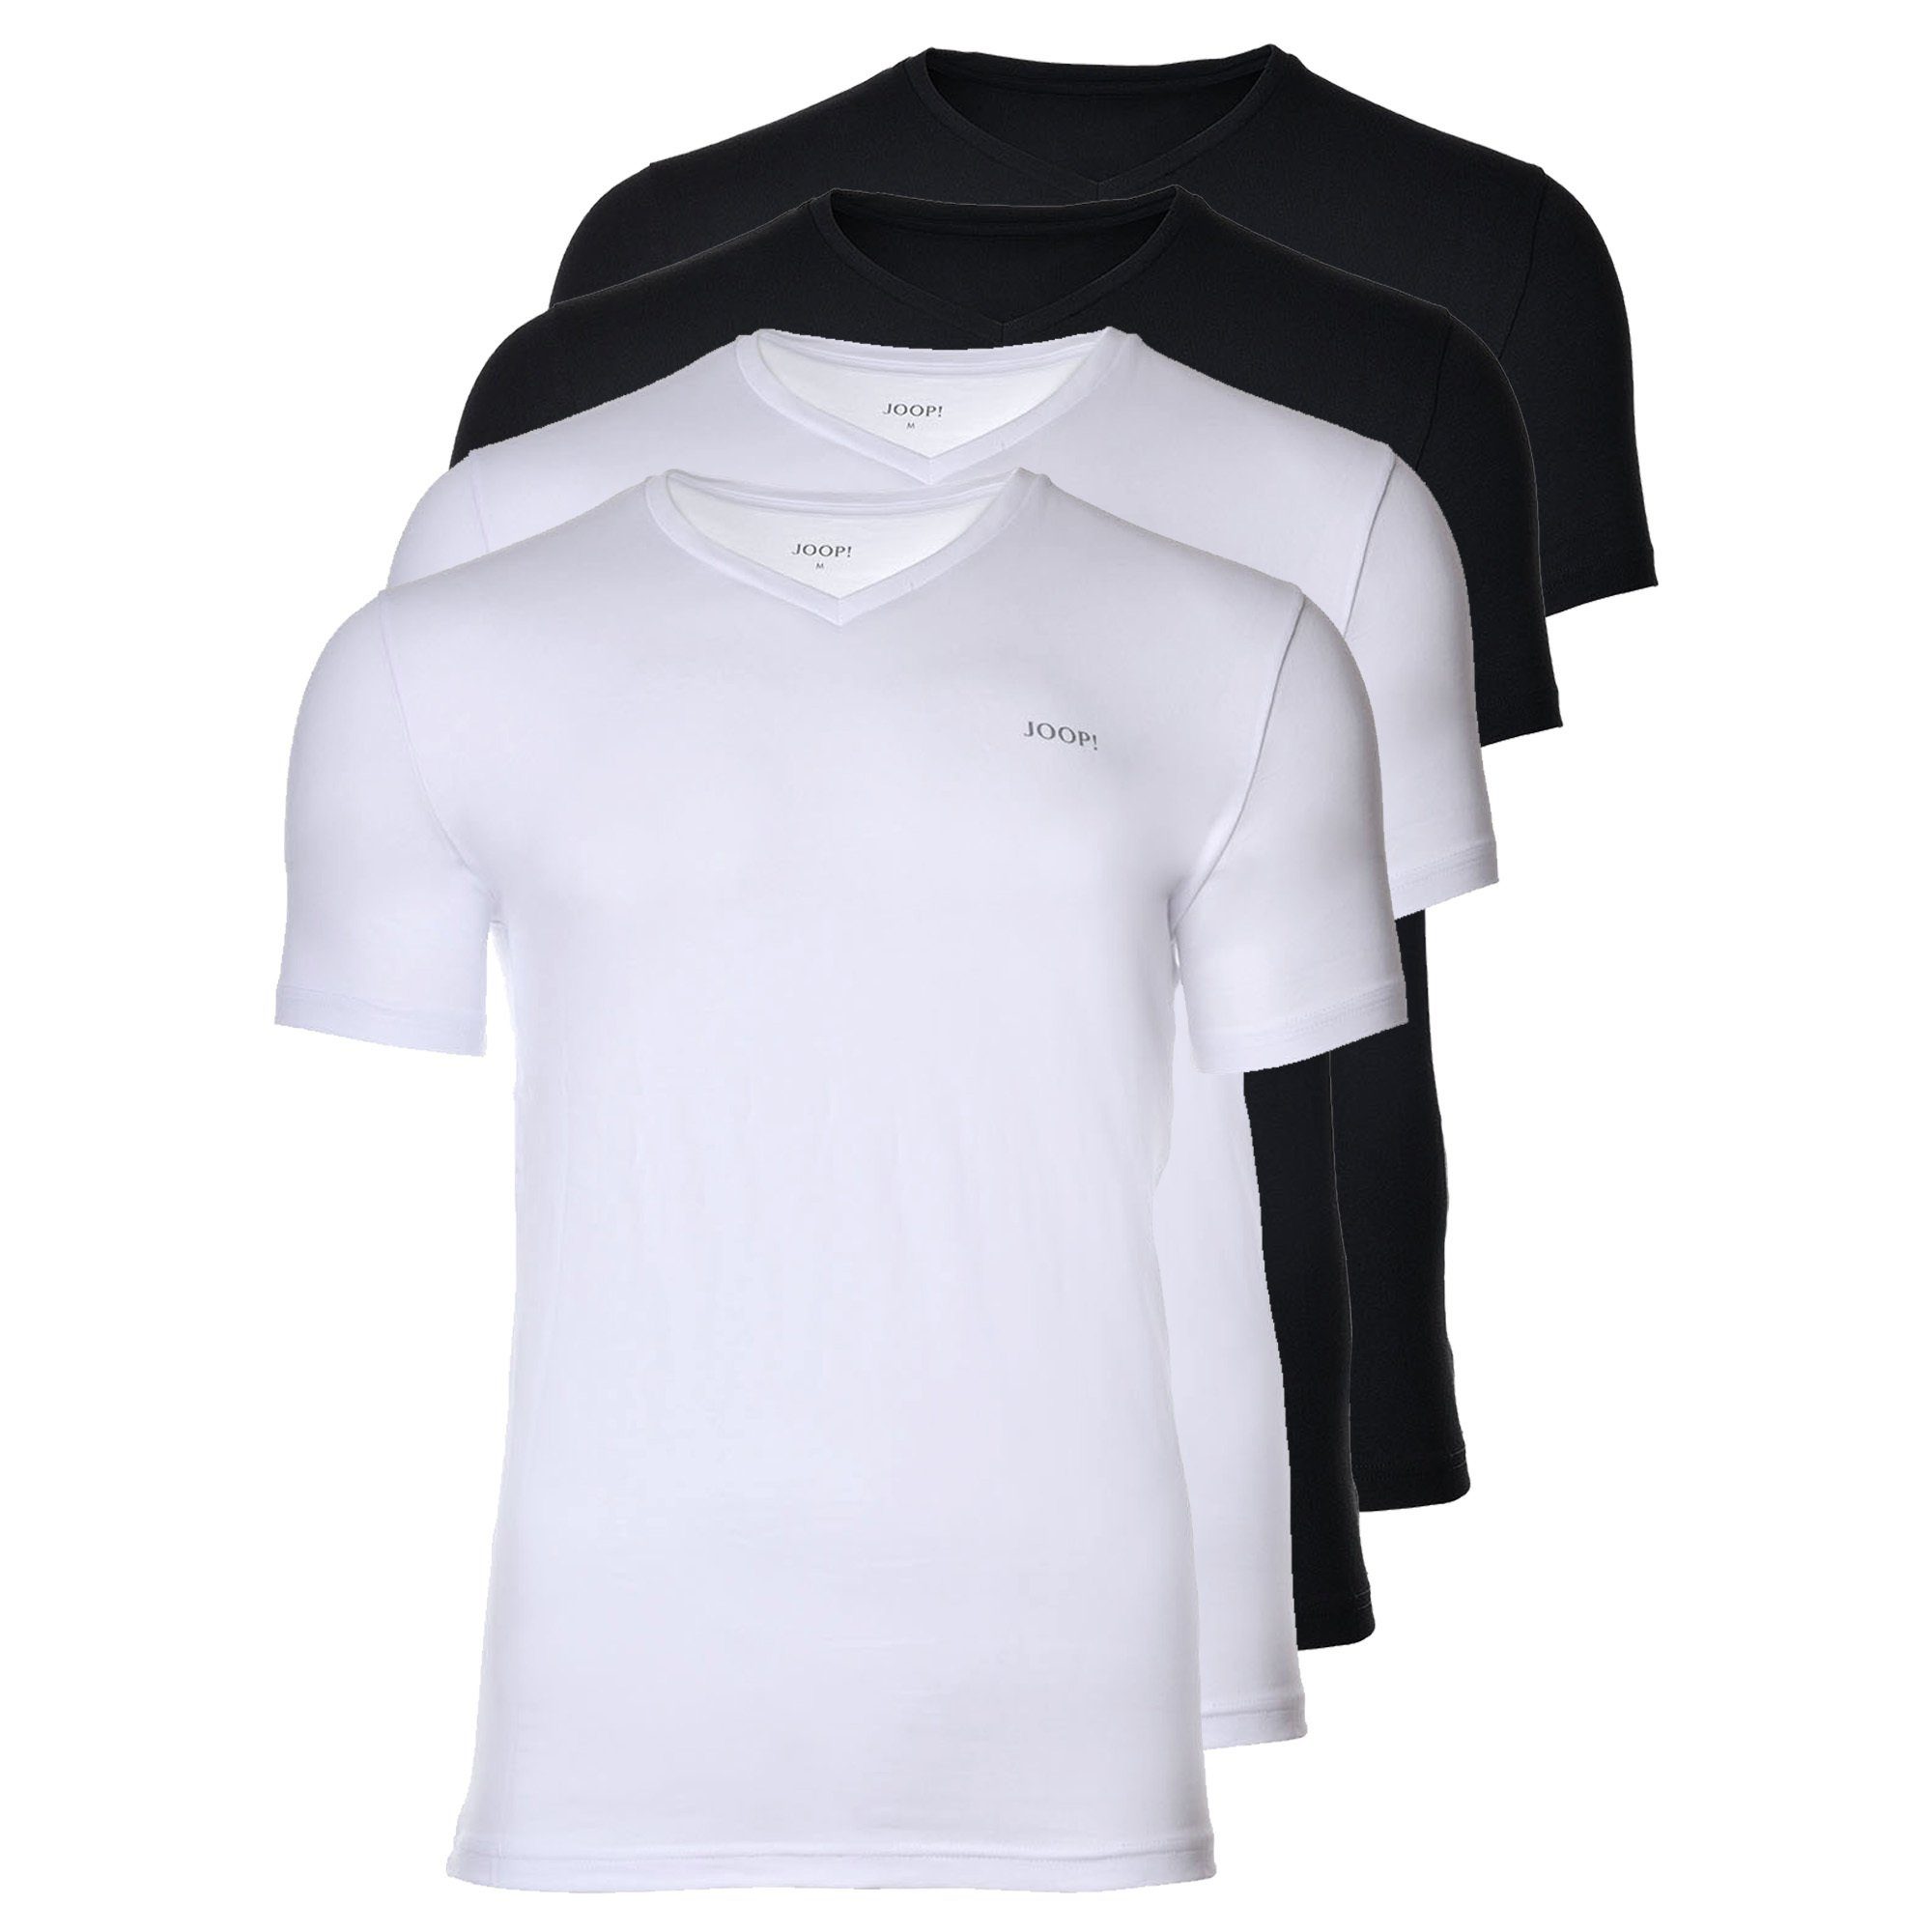 Joop! T-Shirt Herren Unterhemd, 4er Pack - T-Shirt, V-Neck Schwarz/Weiß